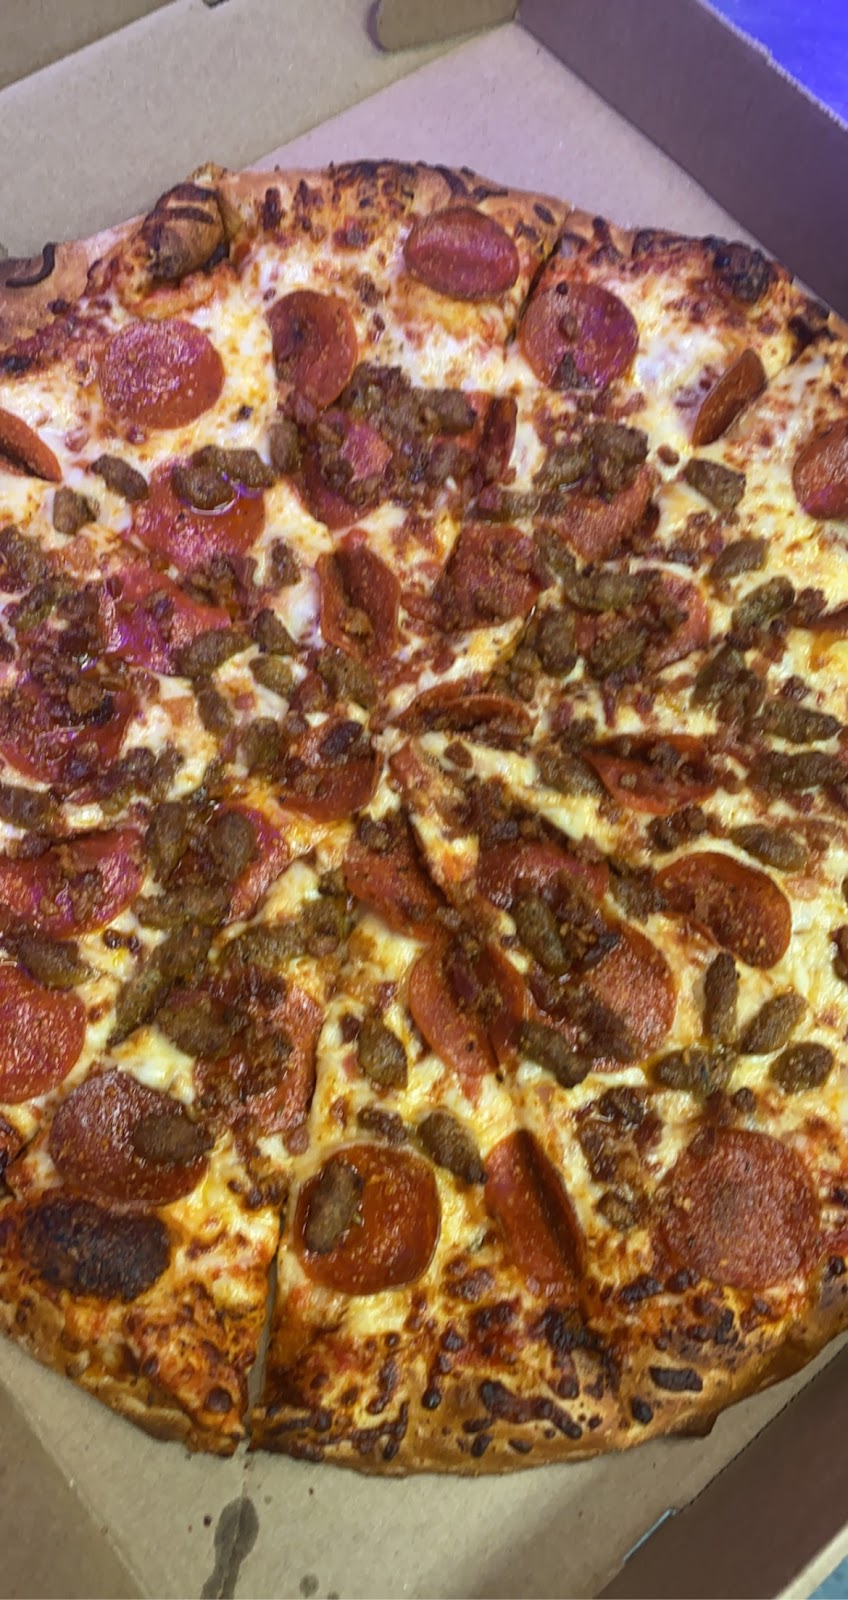 Foxs Pizza Den | 76 Greensburg St, Delmont, PA 15626, USA | Phone: (724) 468-3300